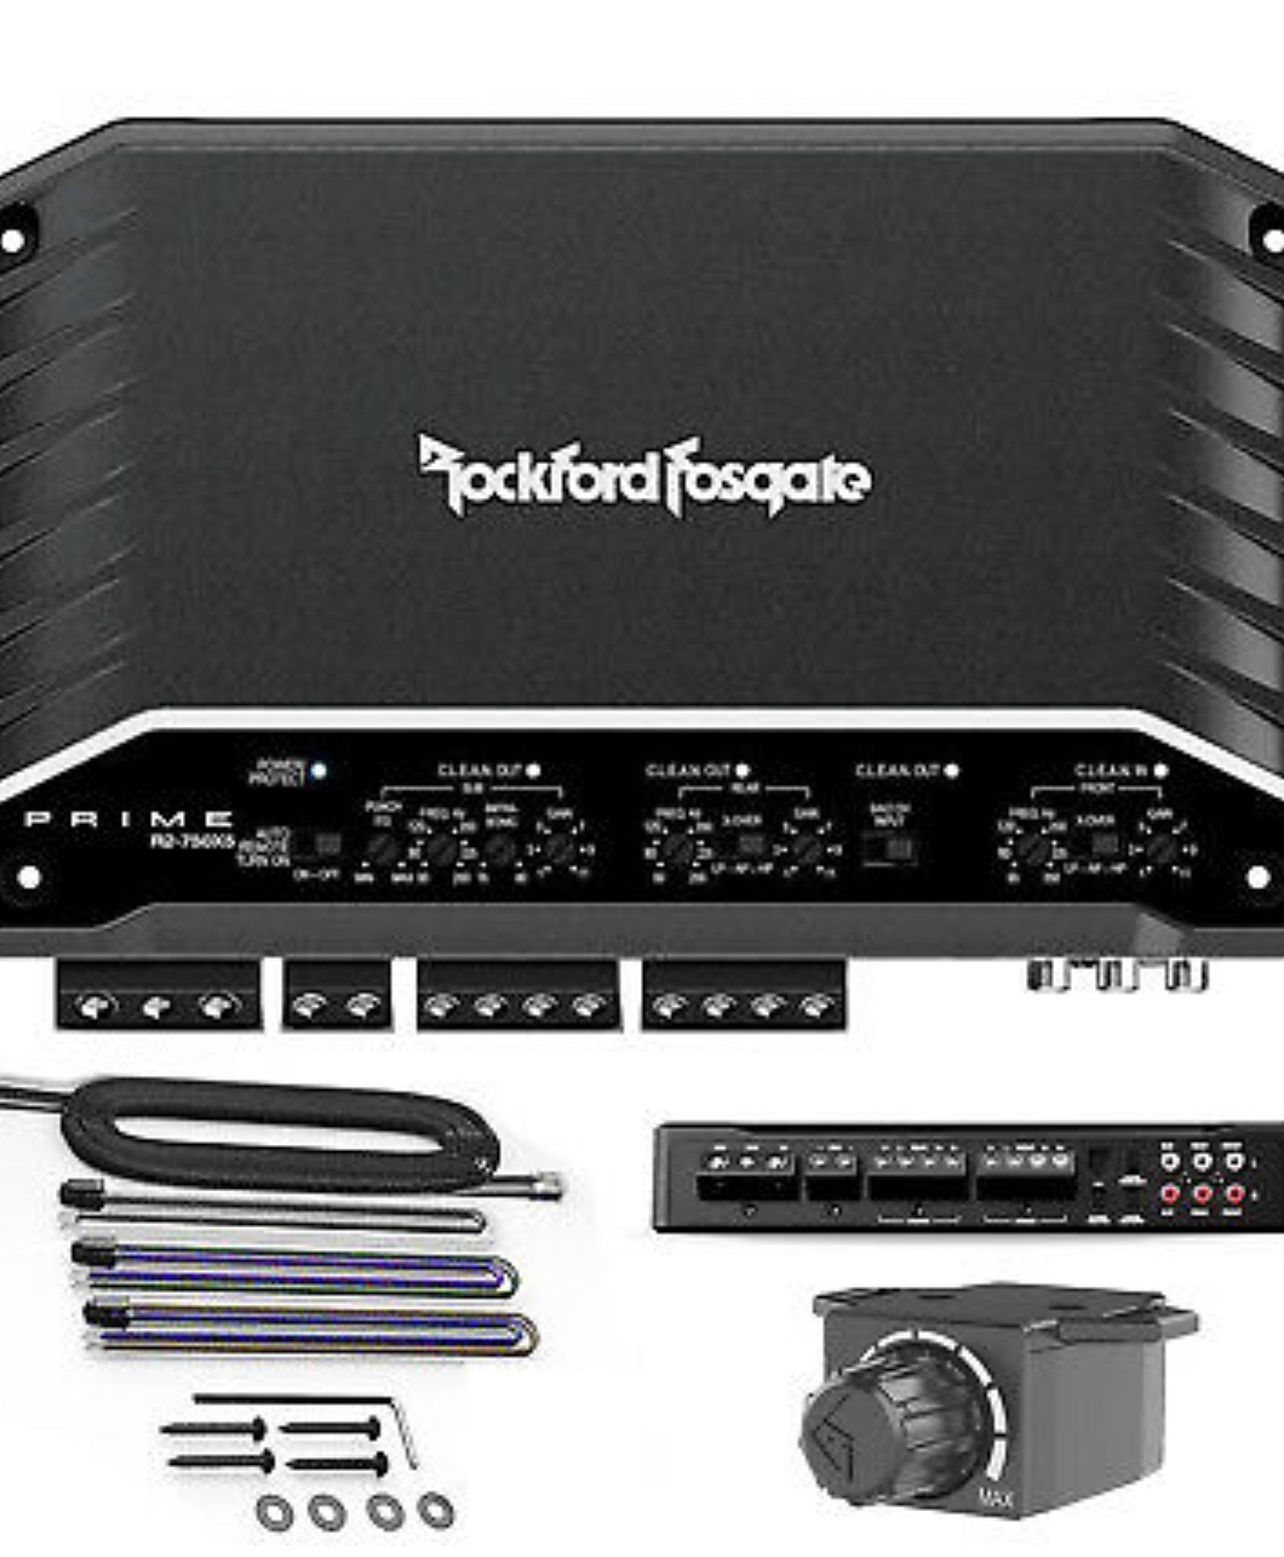 Rockford Fosgate R2-750X5 Prime 750 Watt Full Range 5-Ch Power Amplifier Class D